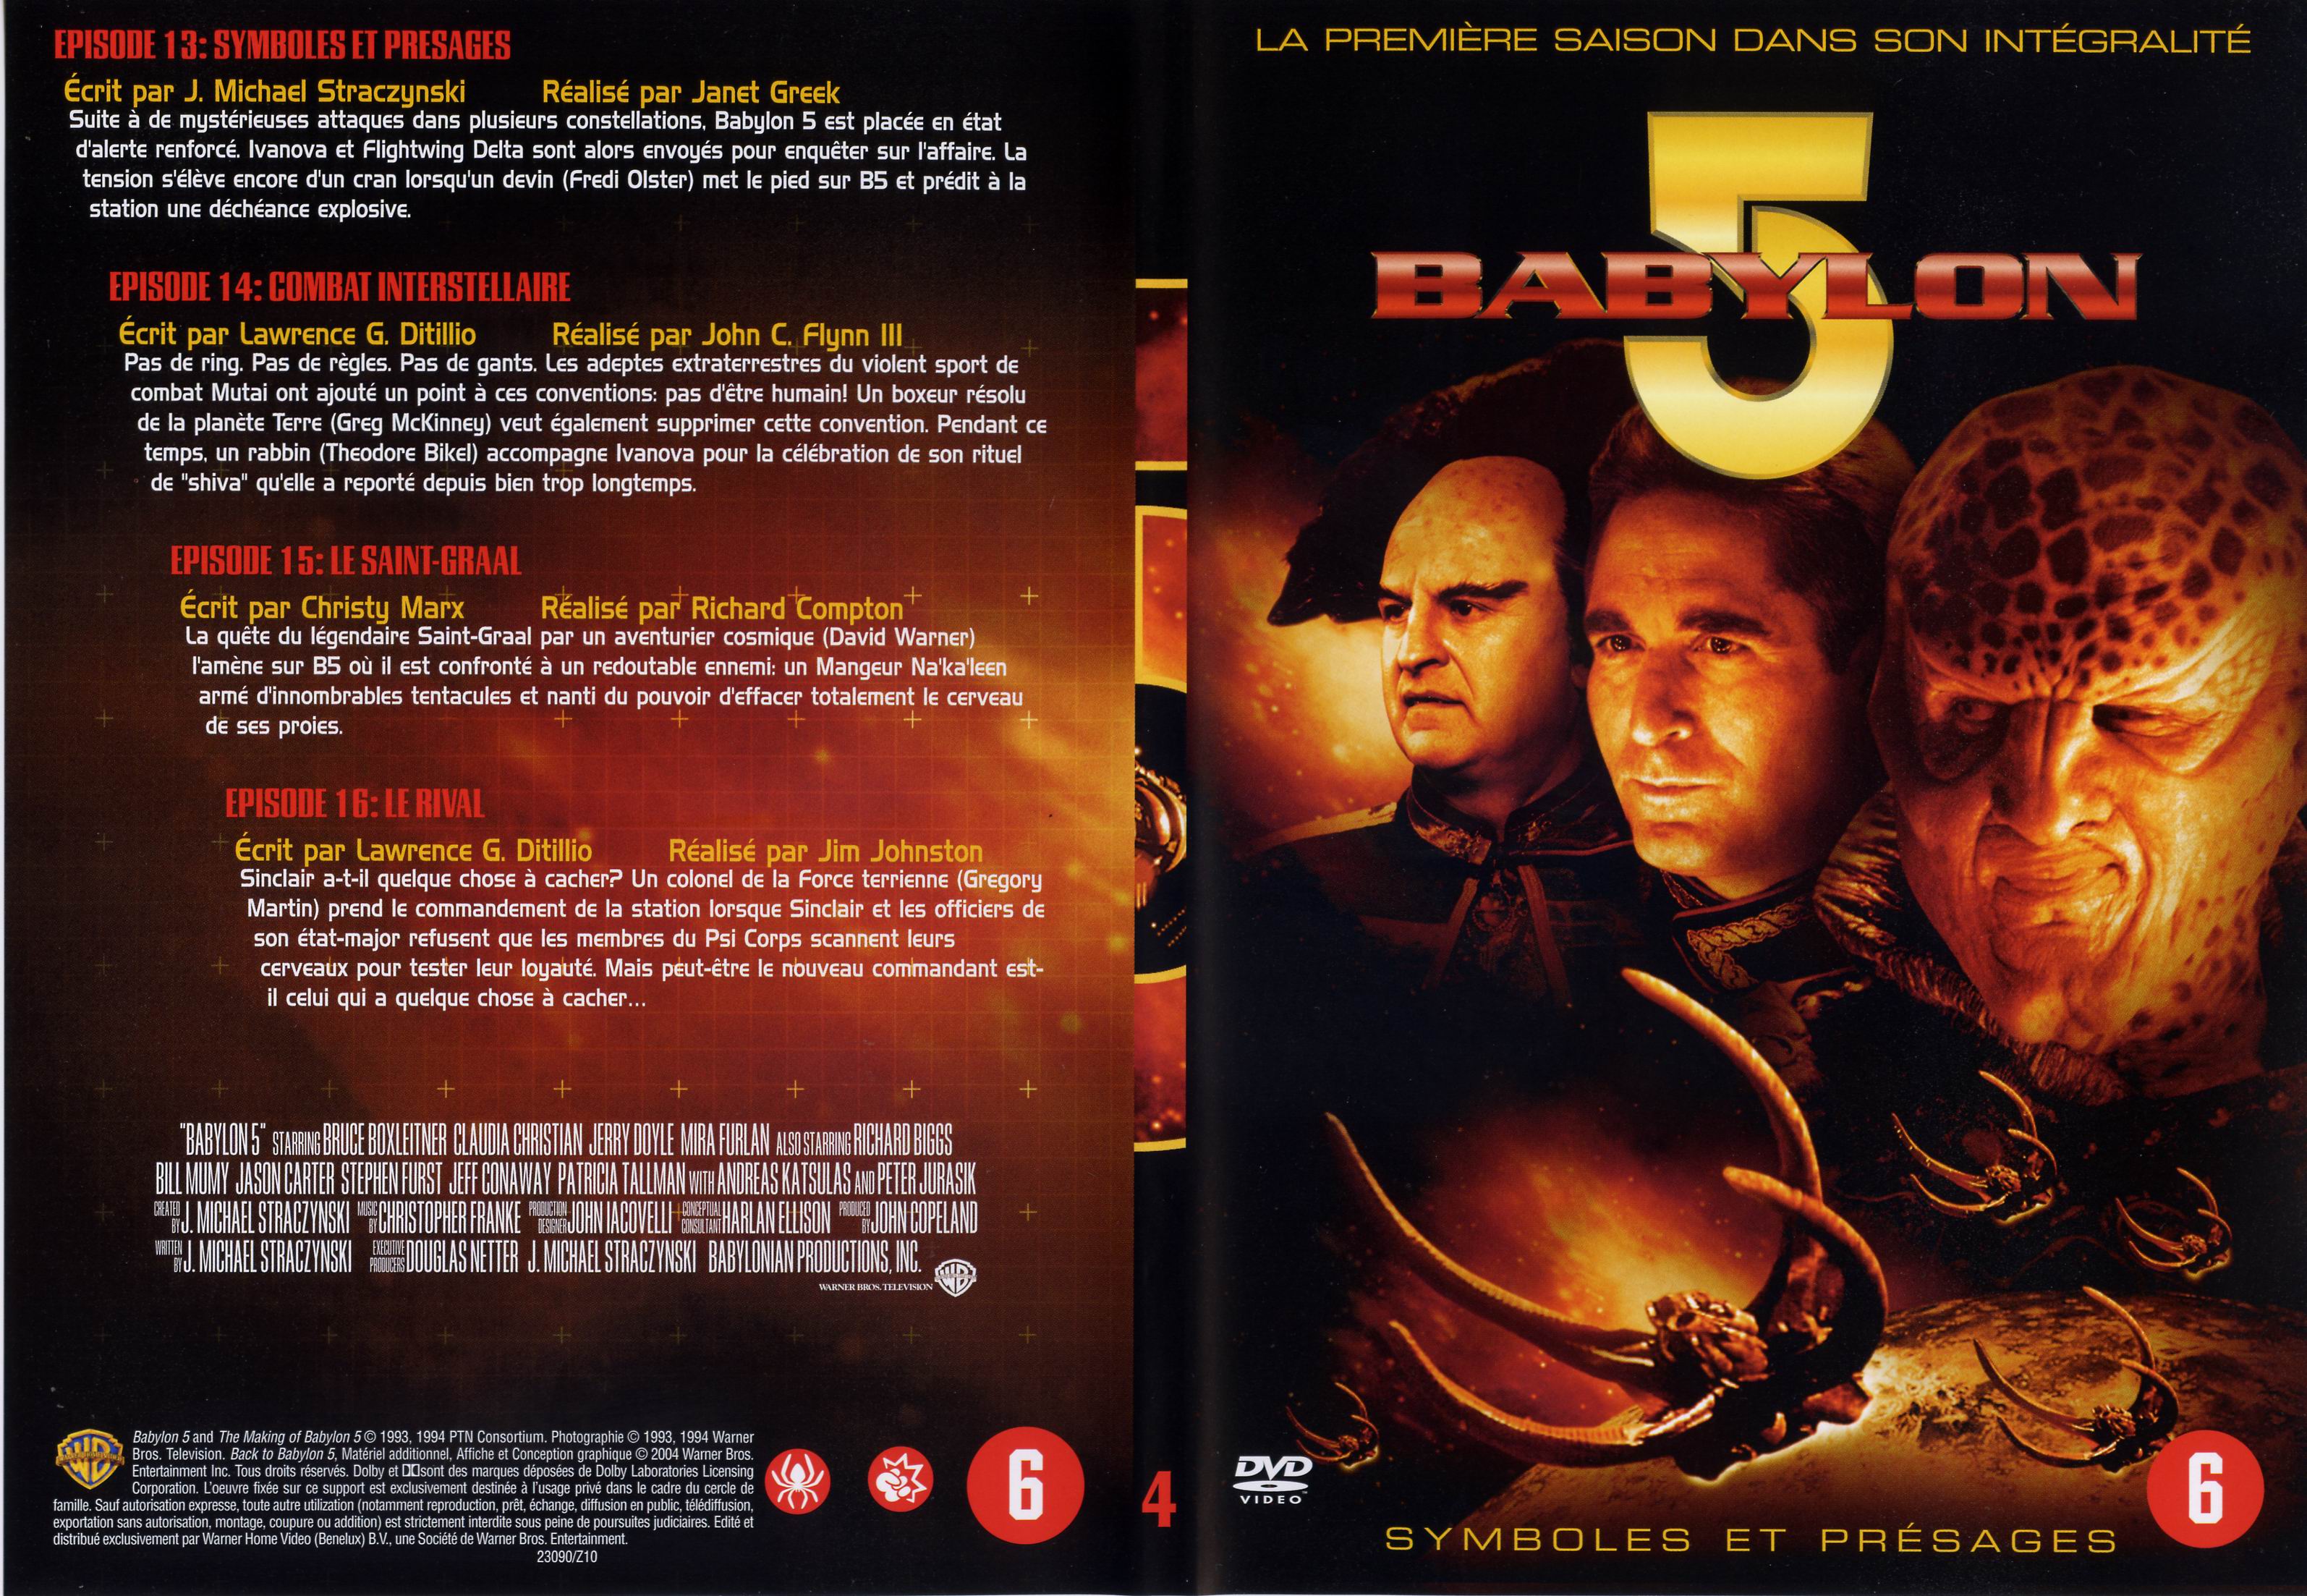 Jaquette DVD Babylon 5 saison 1 dvd 4